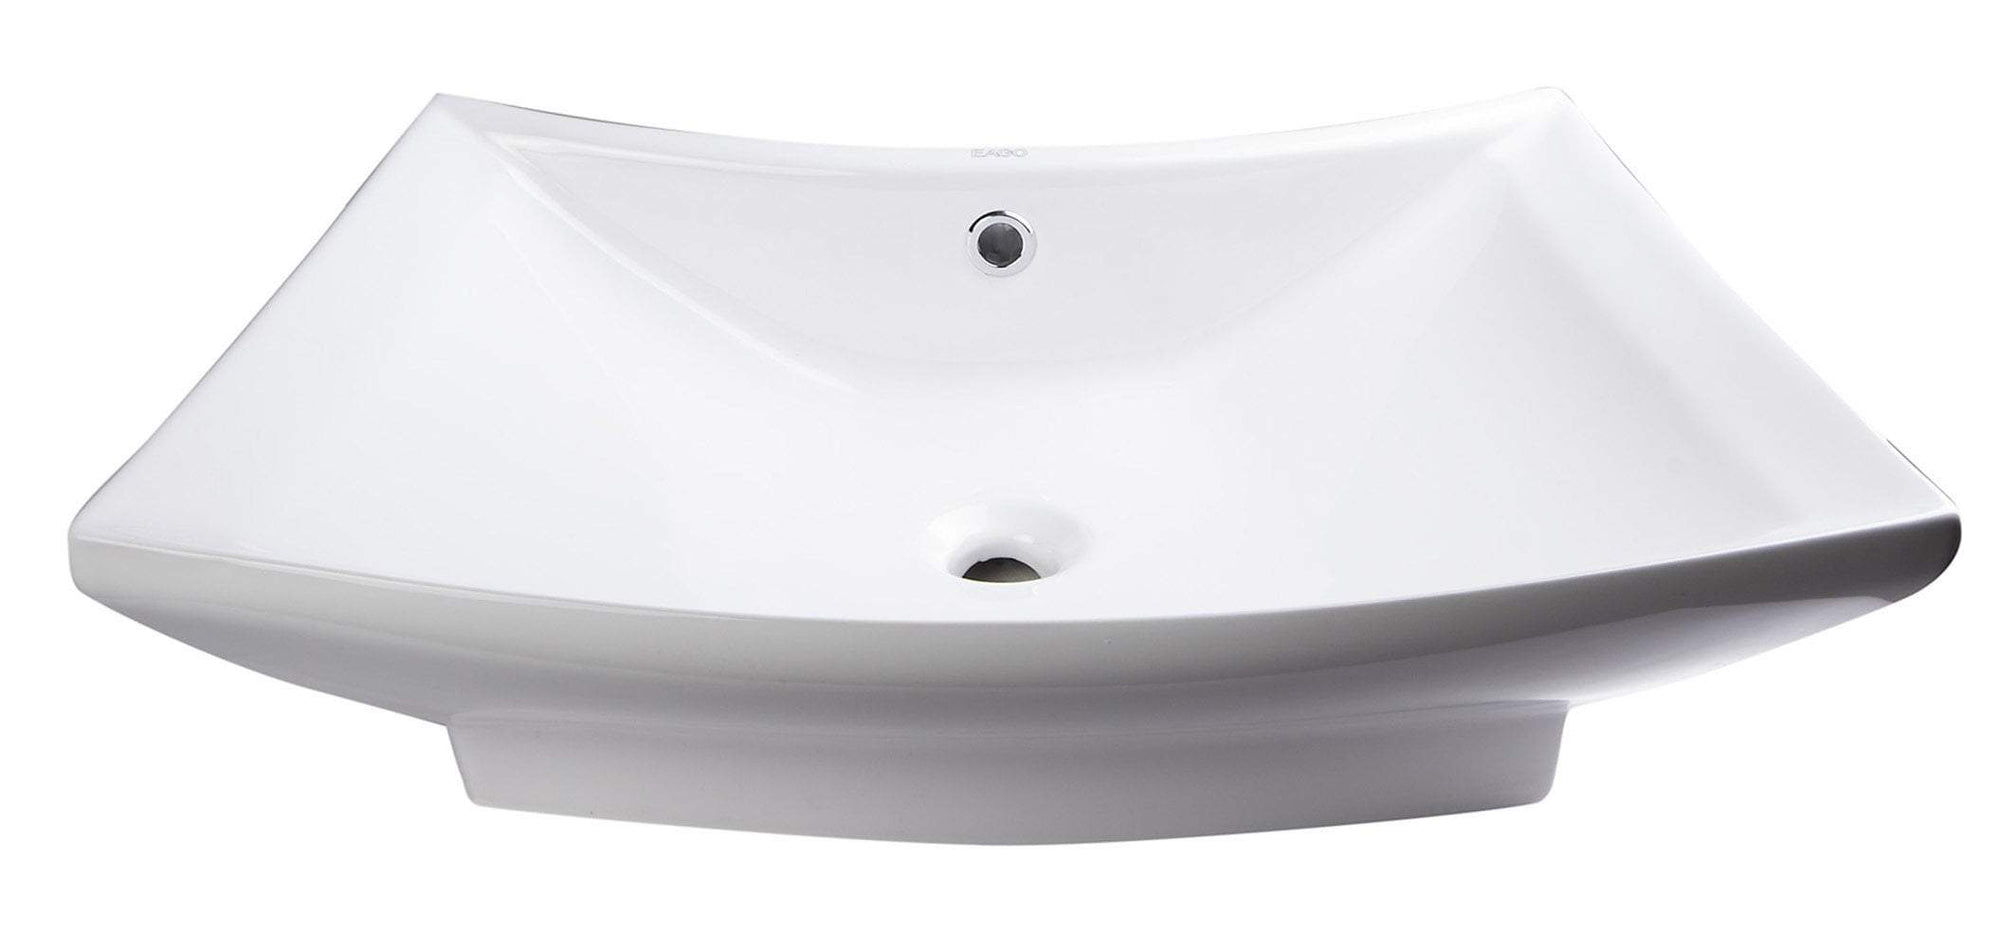 28" Rectangular Porcelain Bathroom Vessel Sink with Single Hole